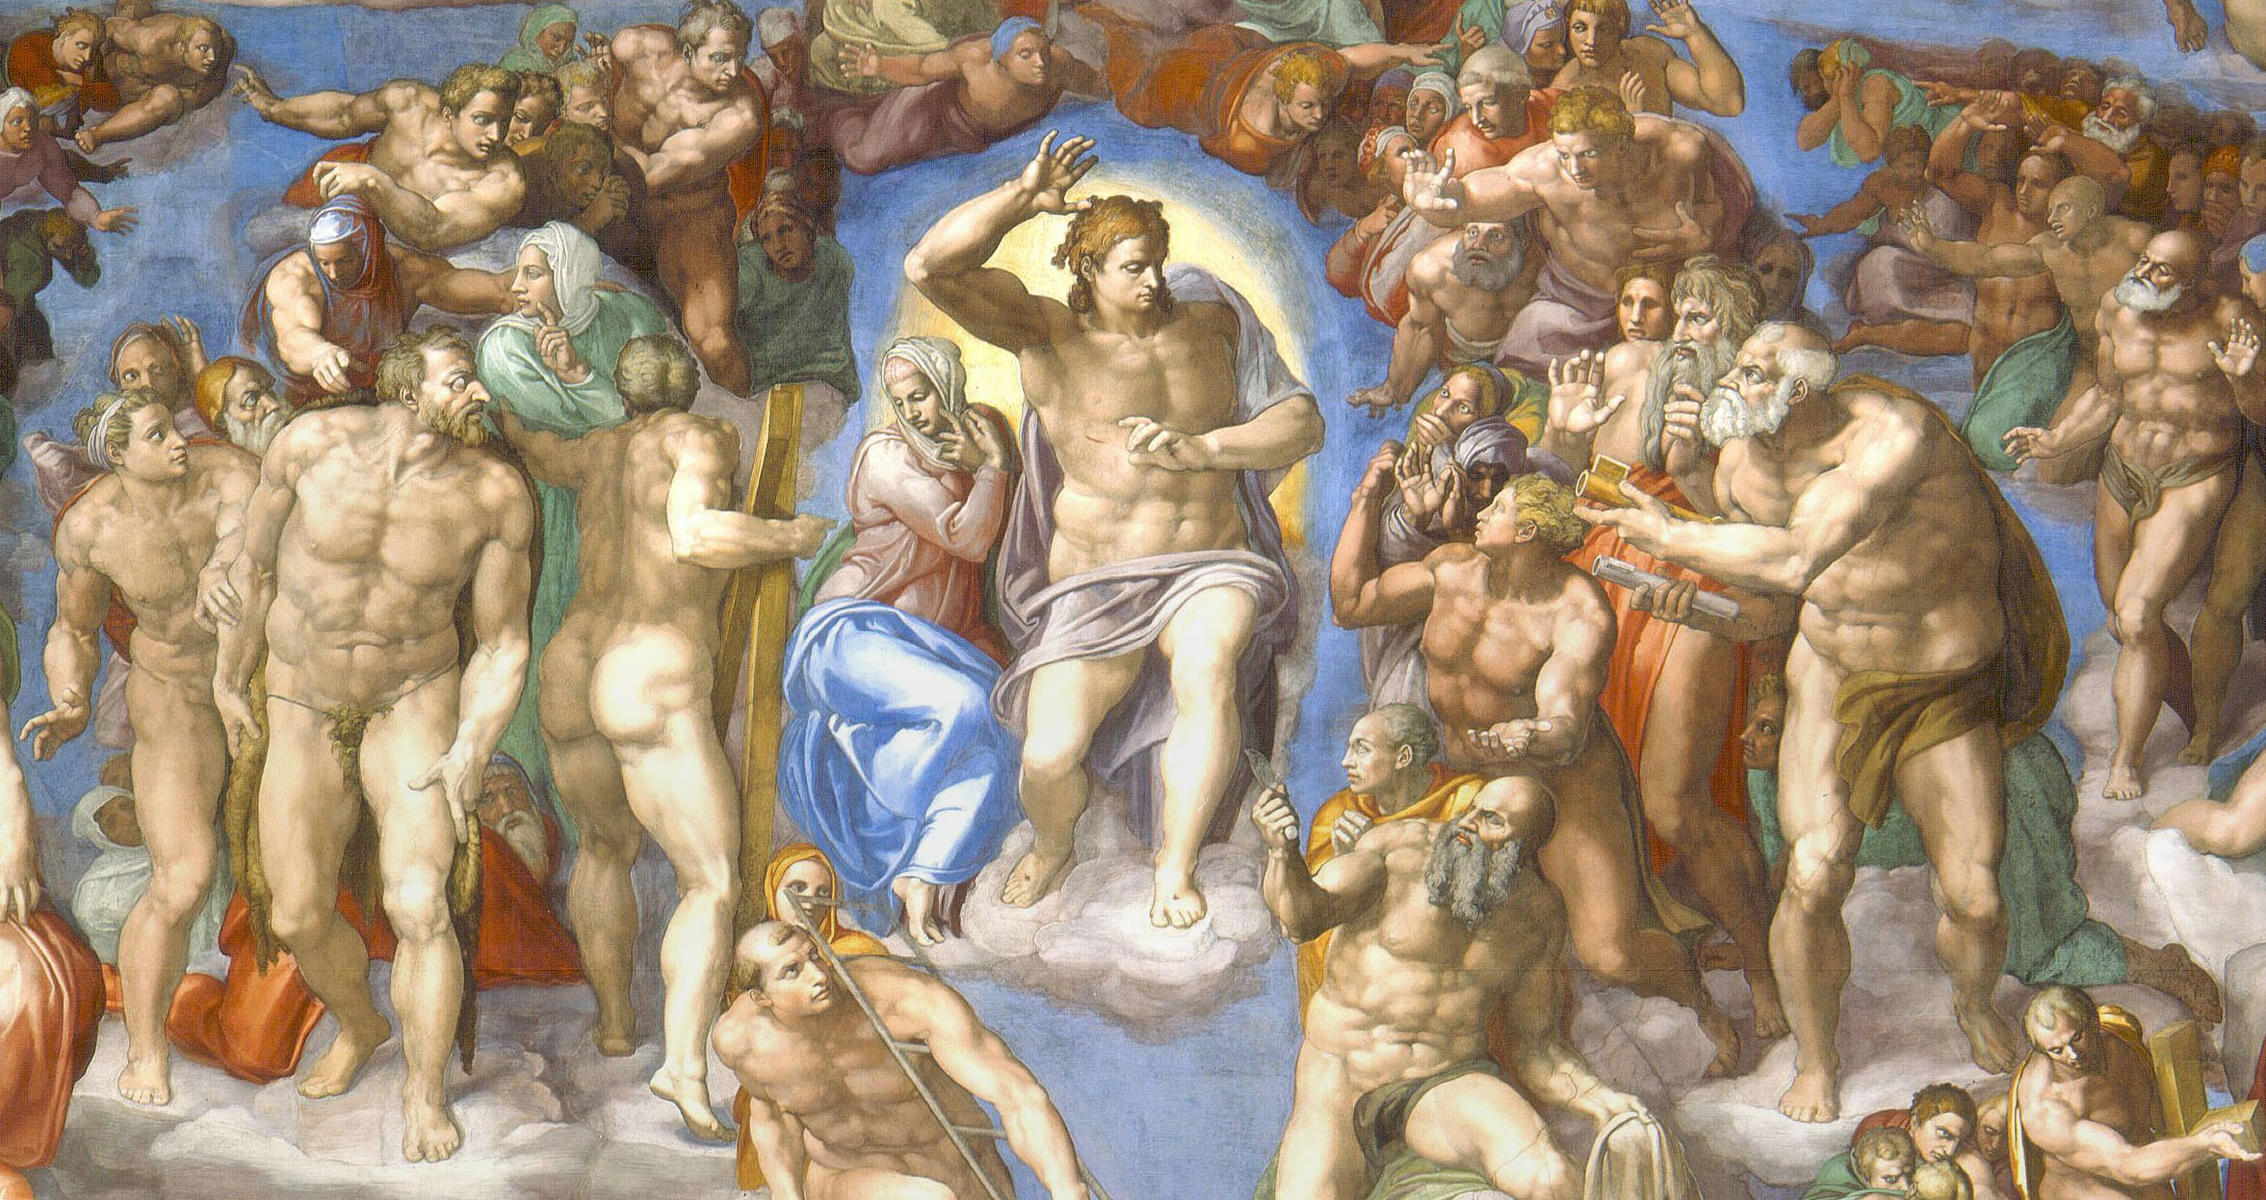 Appreciate the very famous painting of Cristo Juiz